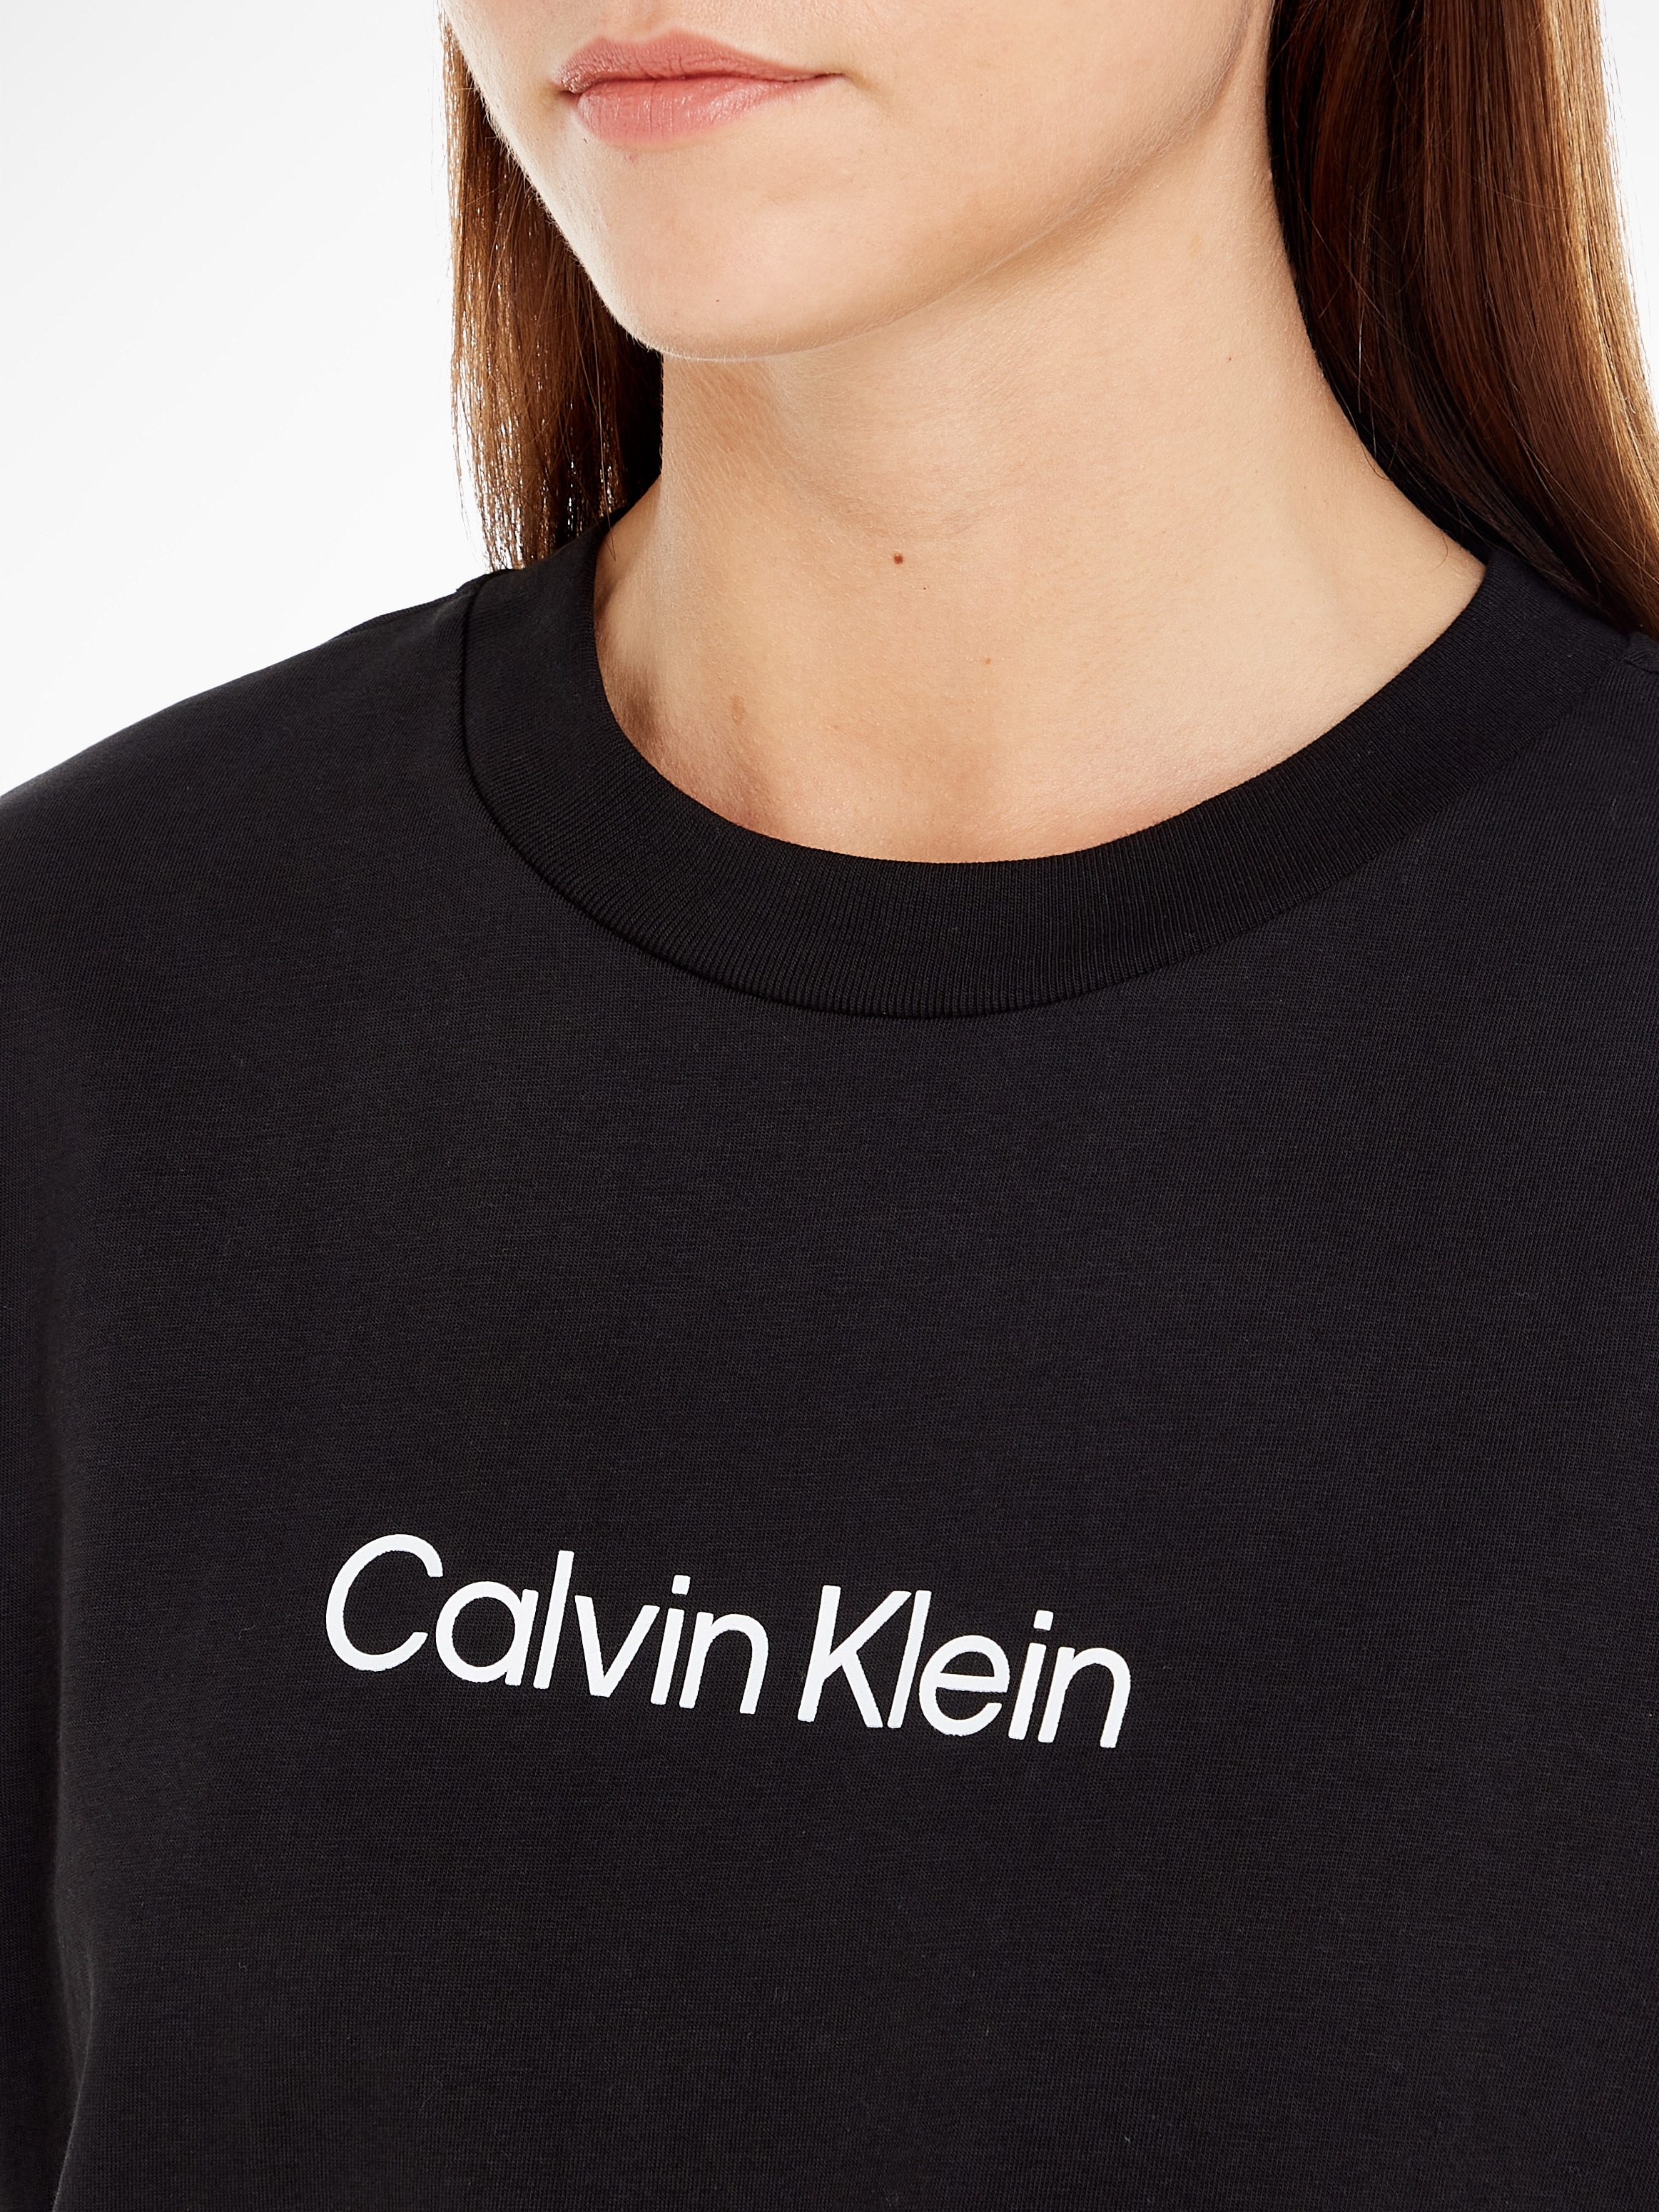 ♕ LOGO REGULAR« bei Klein HERO Calvin »Shirt T-Shirt